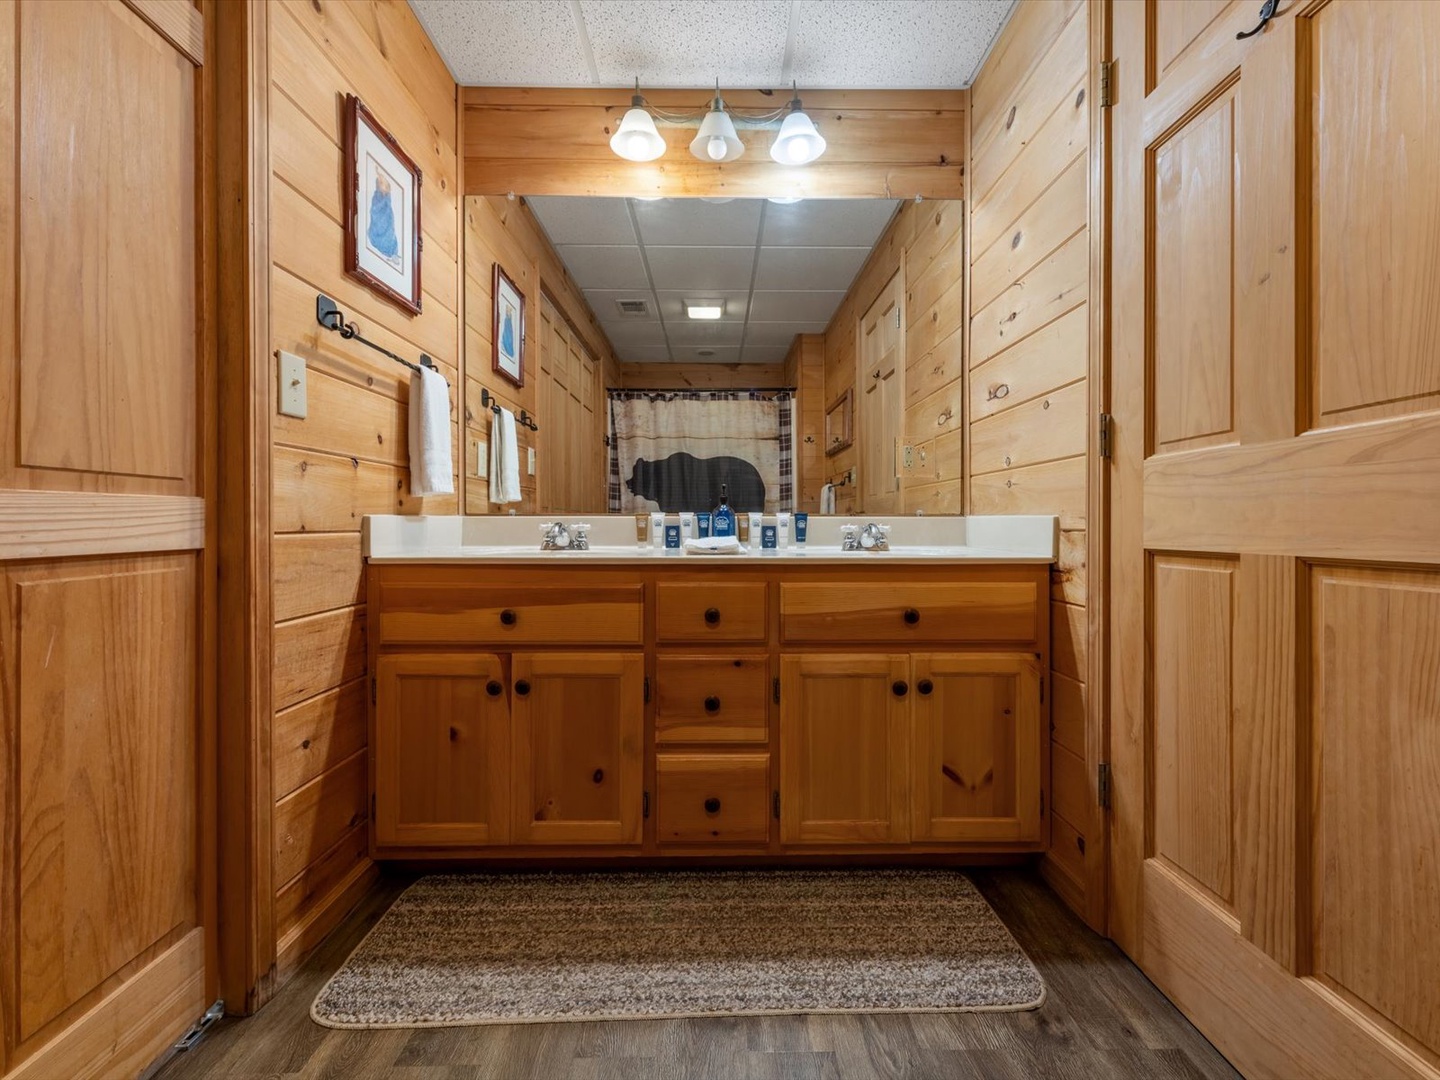 Bear Necessities- Lower level shared bathroom vanity